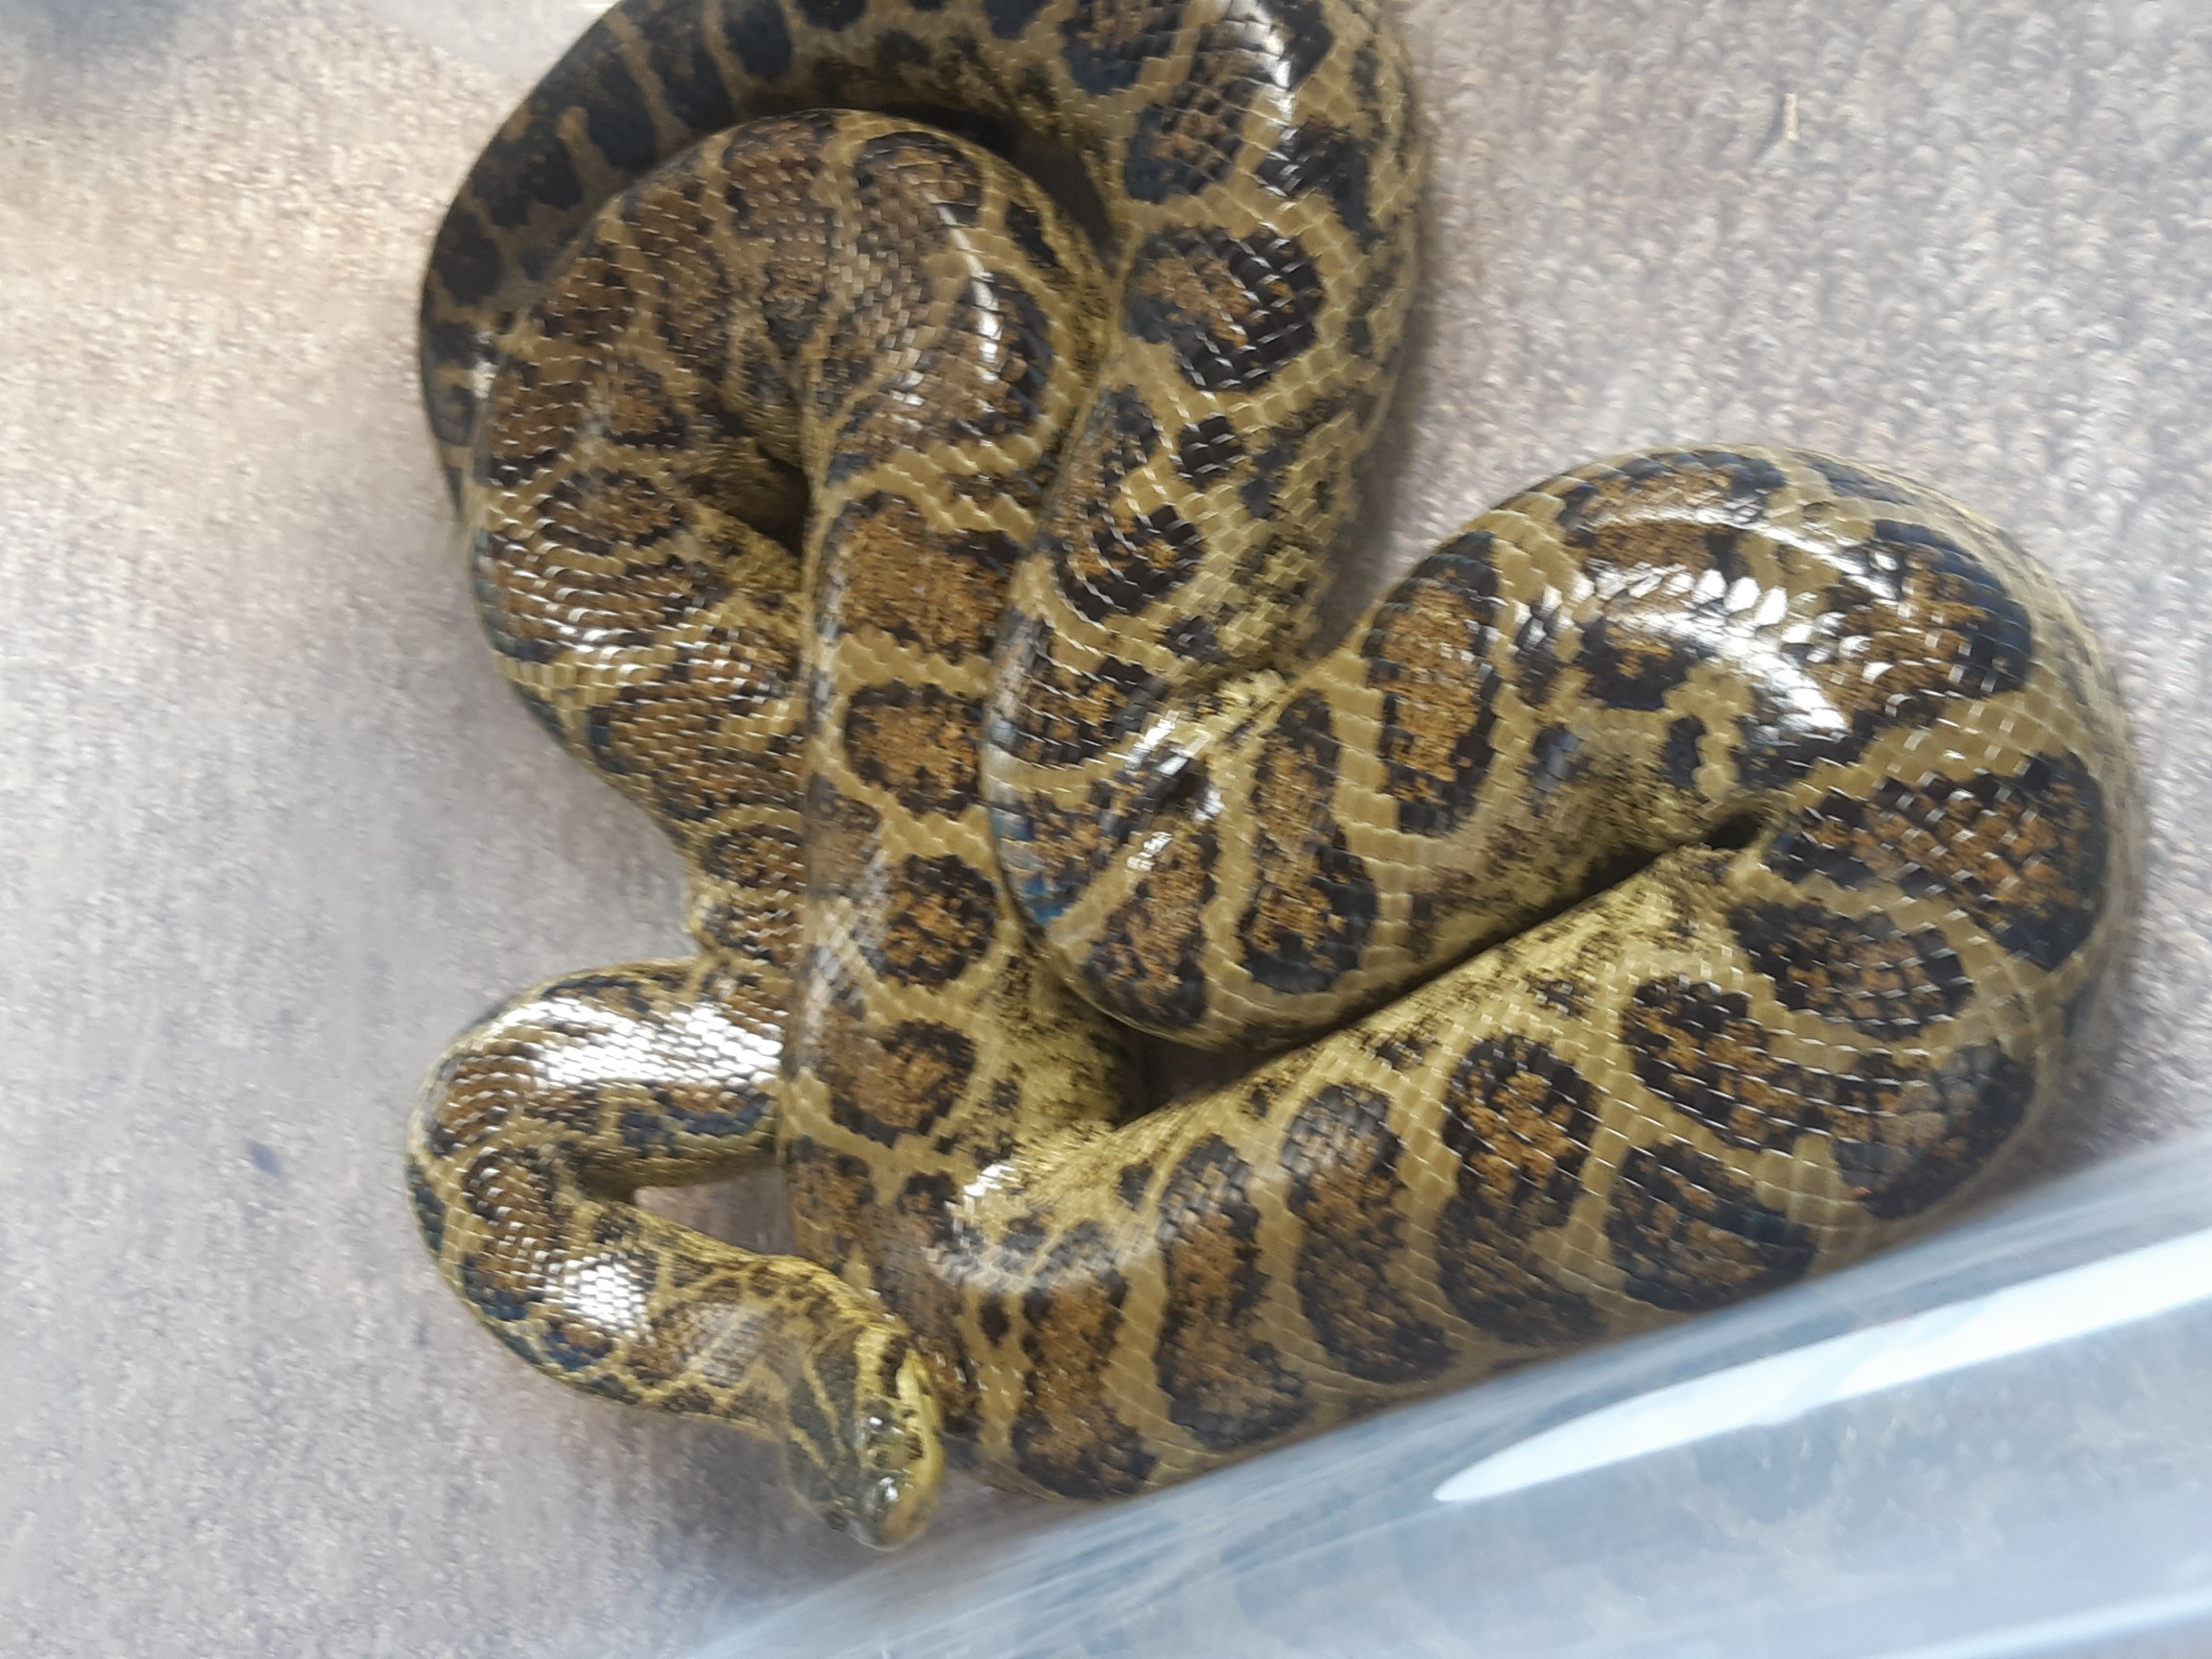 yellow anaconda for sale